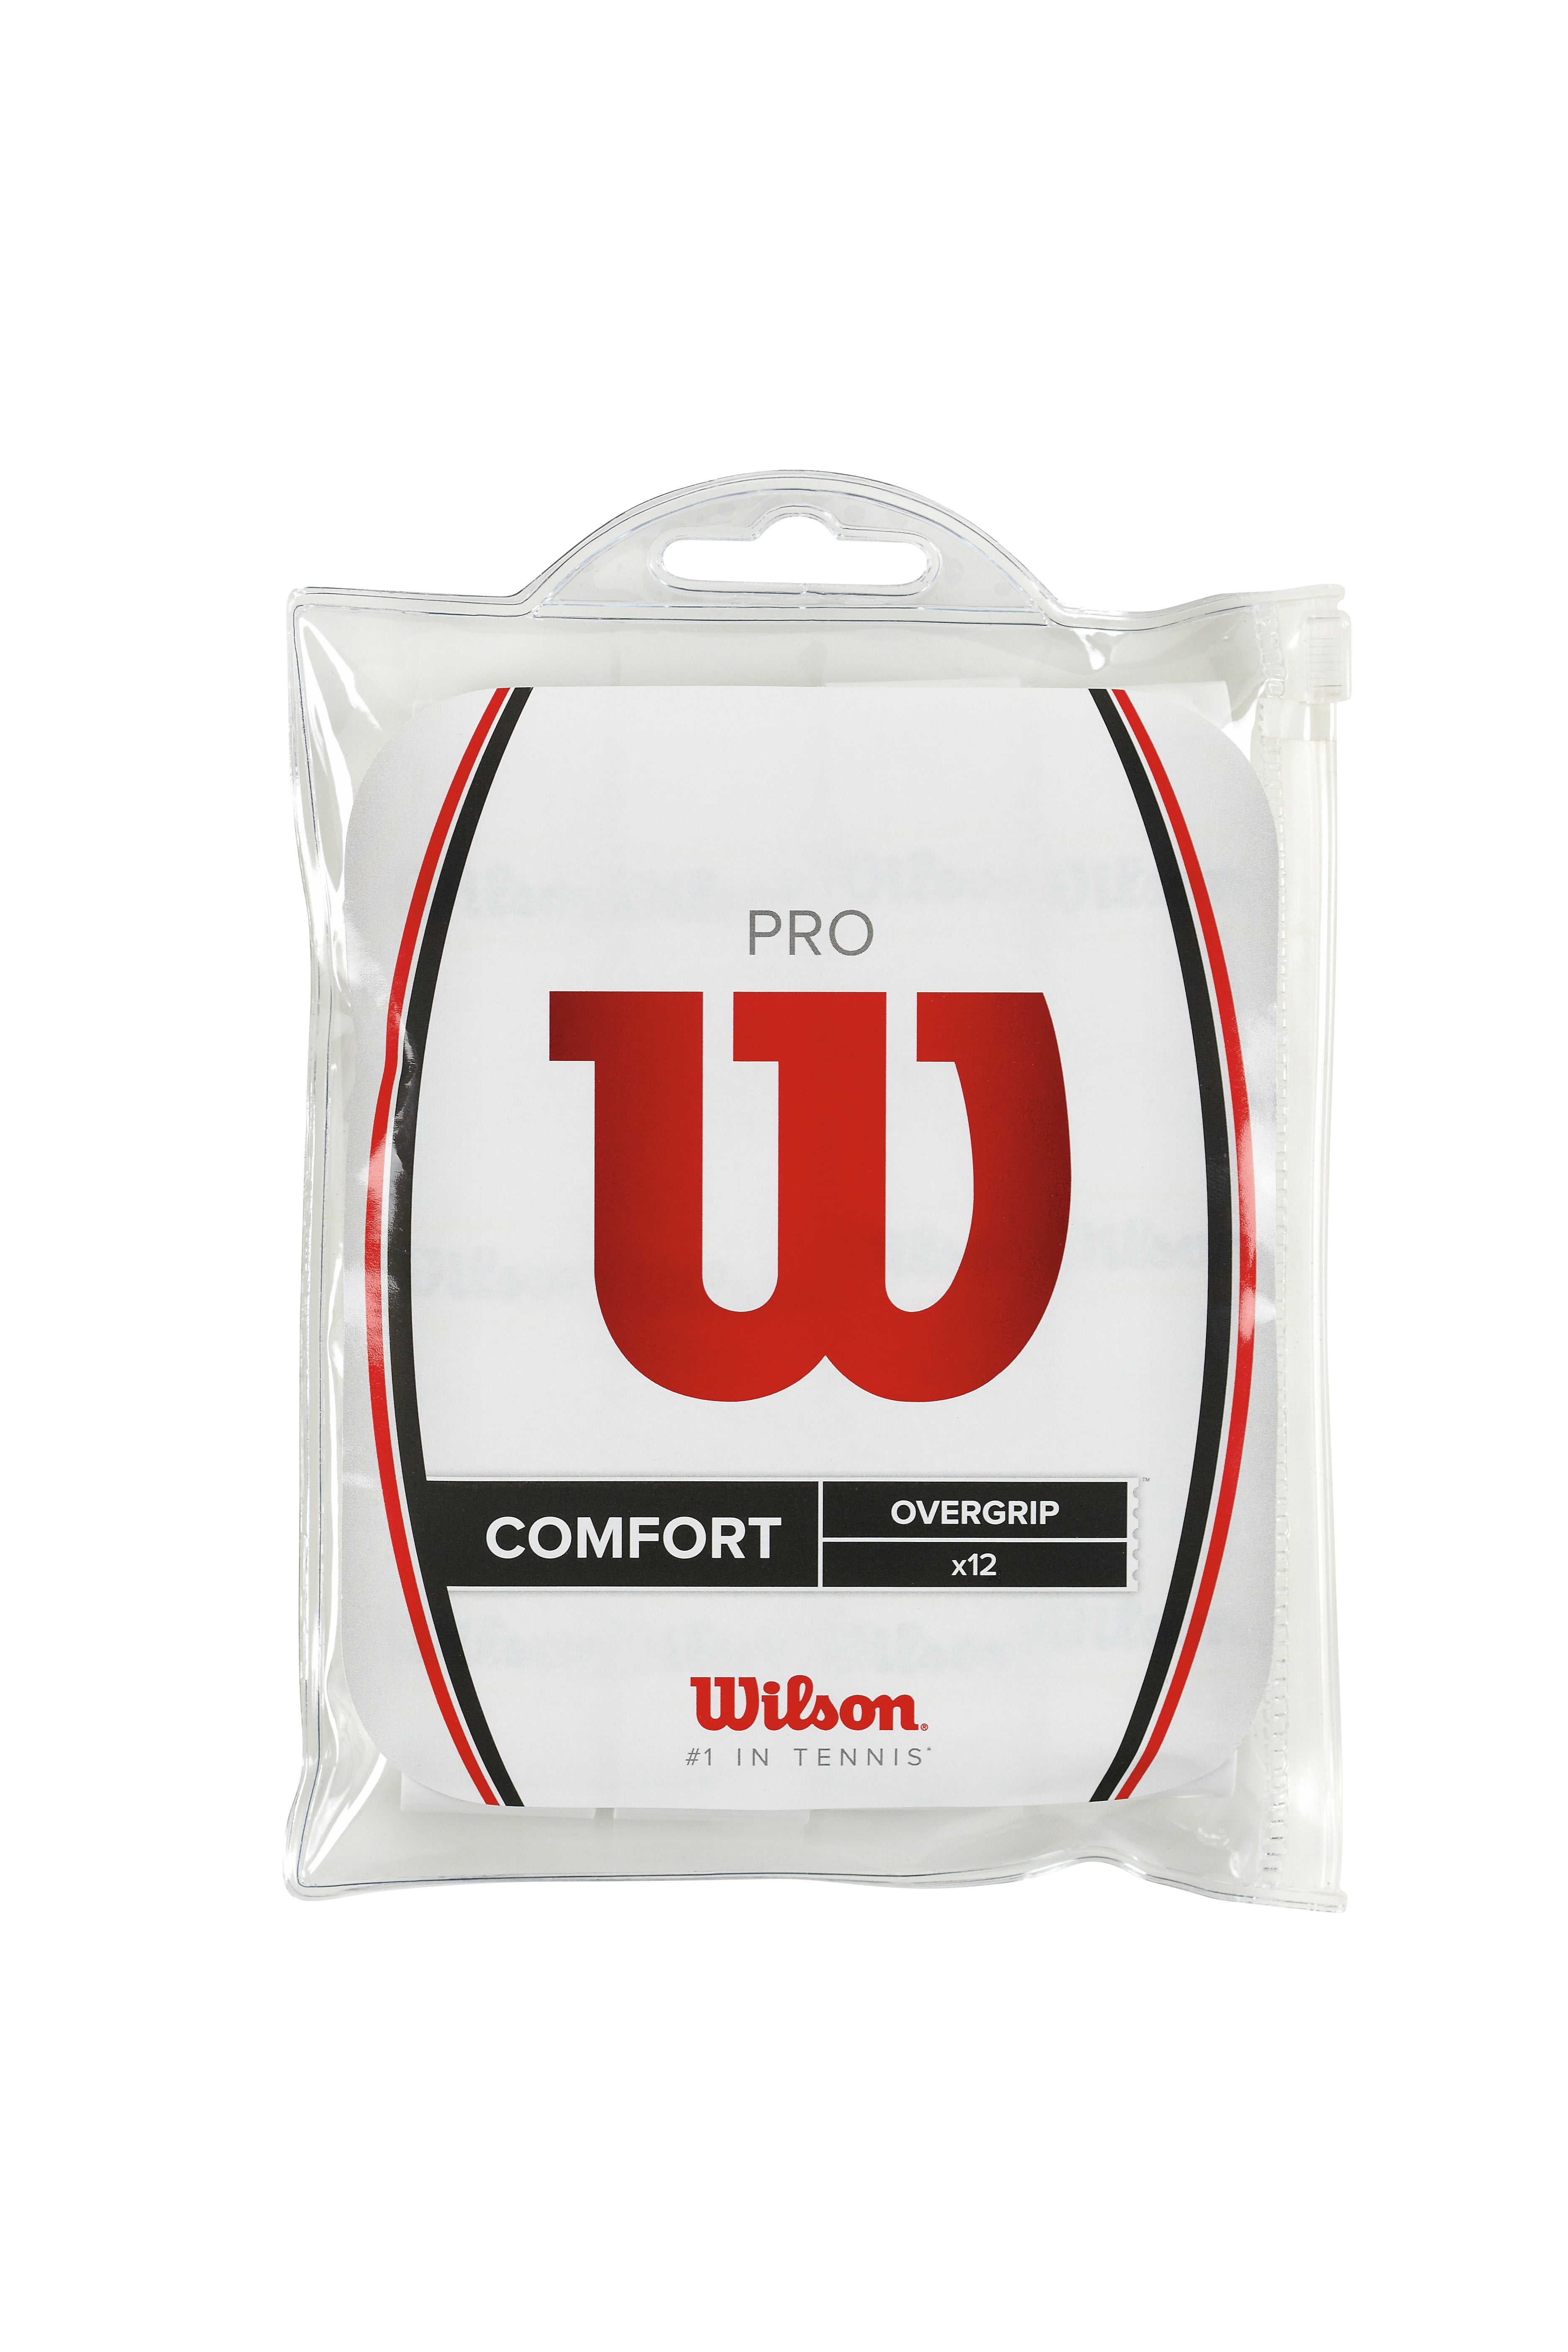 Wilson Ultra Wrap Gray Comfort Over-grip Tennis Racket Sporting WRZ471718 NEW 